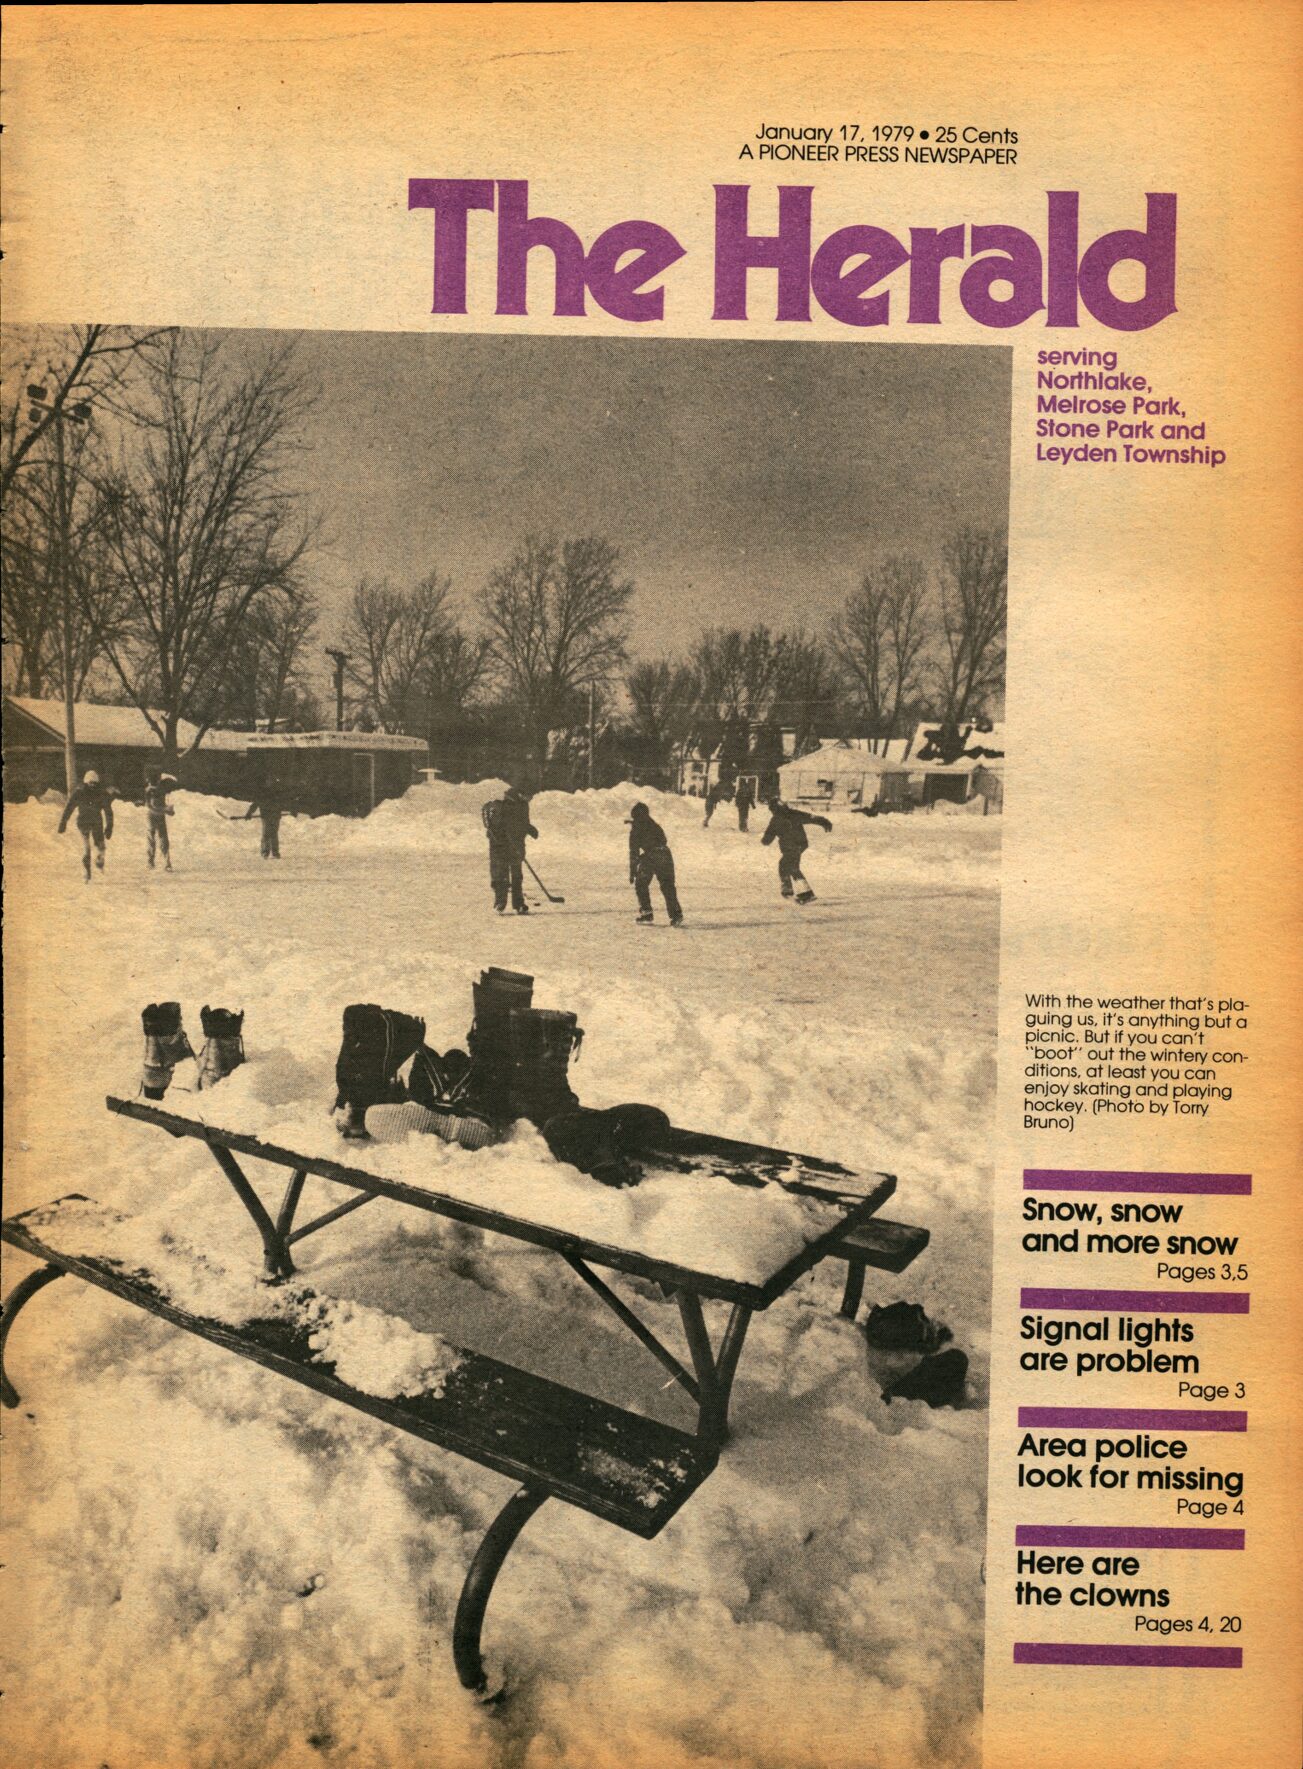 The Herald – 19790117